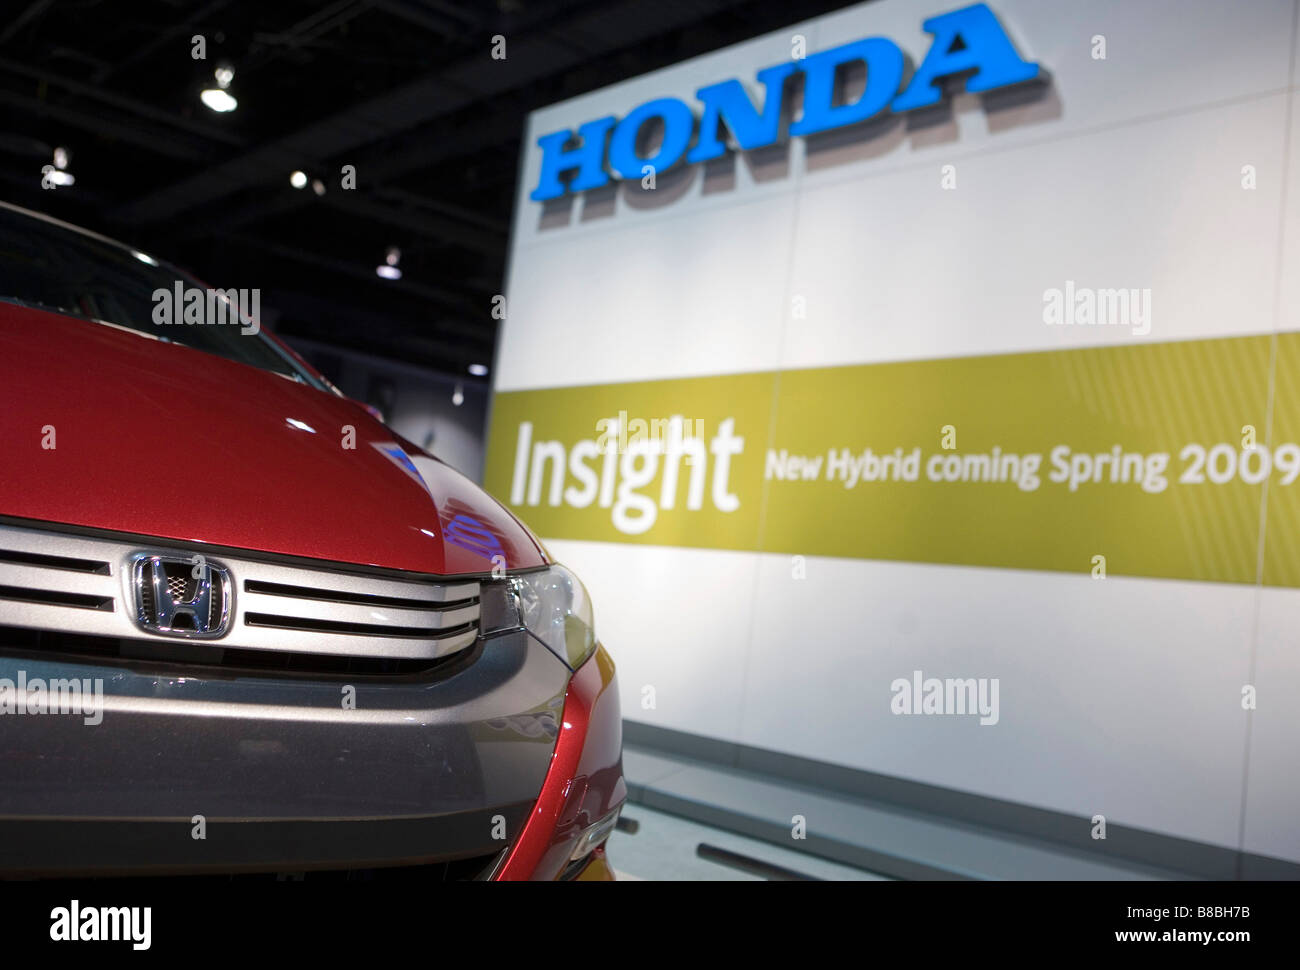 4 February 2009 Washington D C The Honda Insight hybrid vehicle on display at the Washington Auto Show Stock Photo